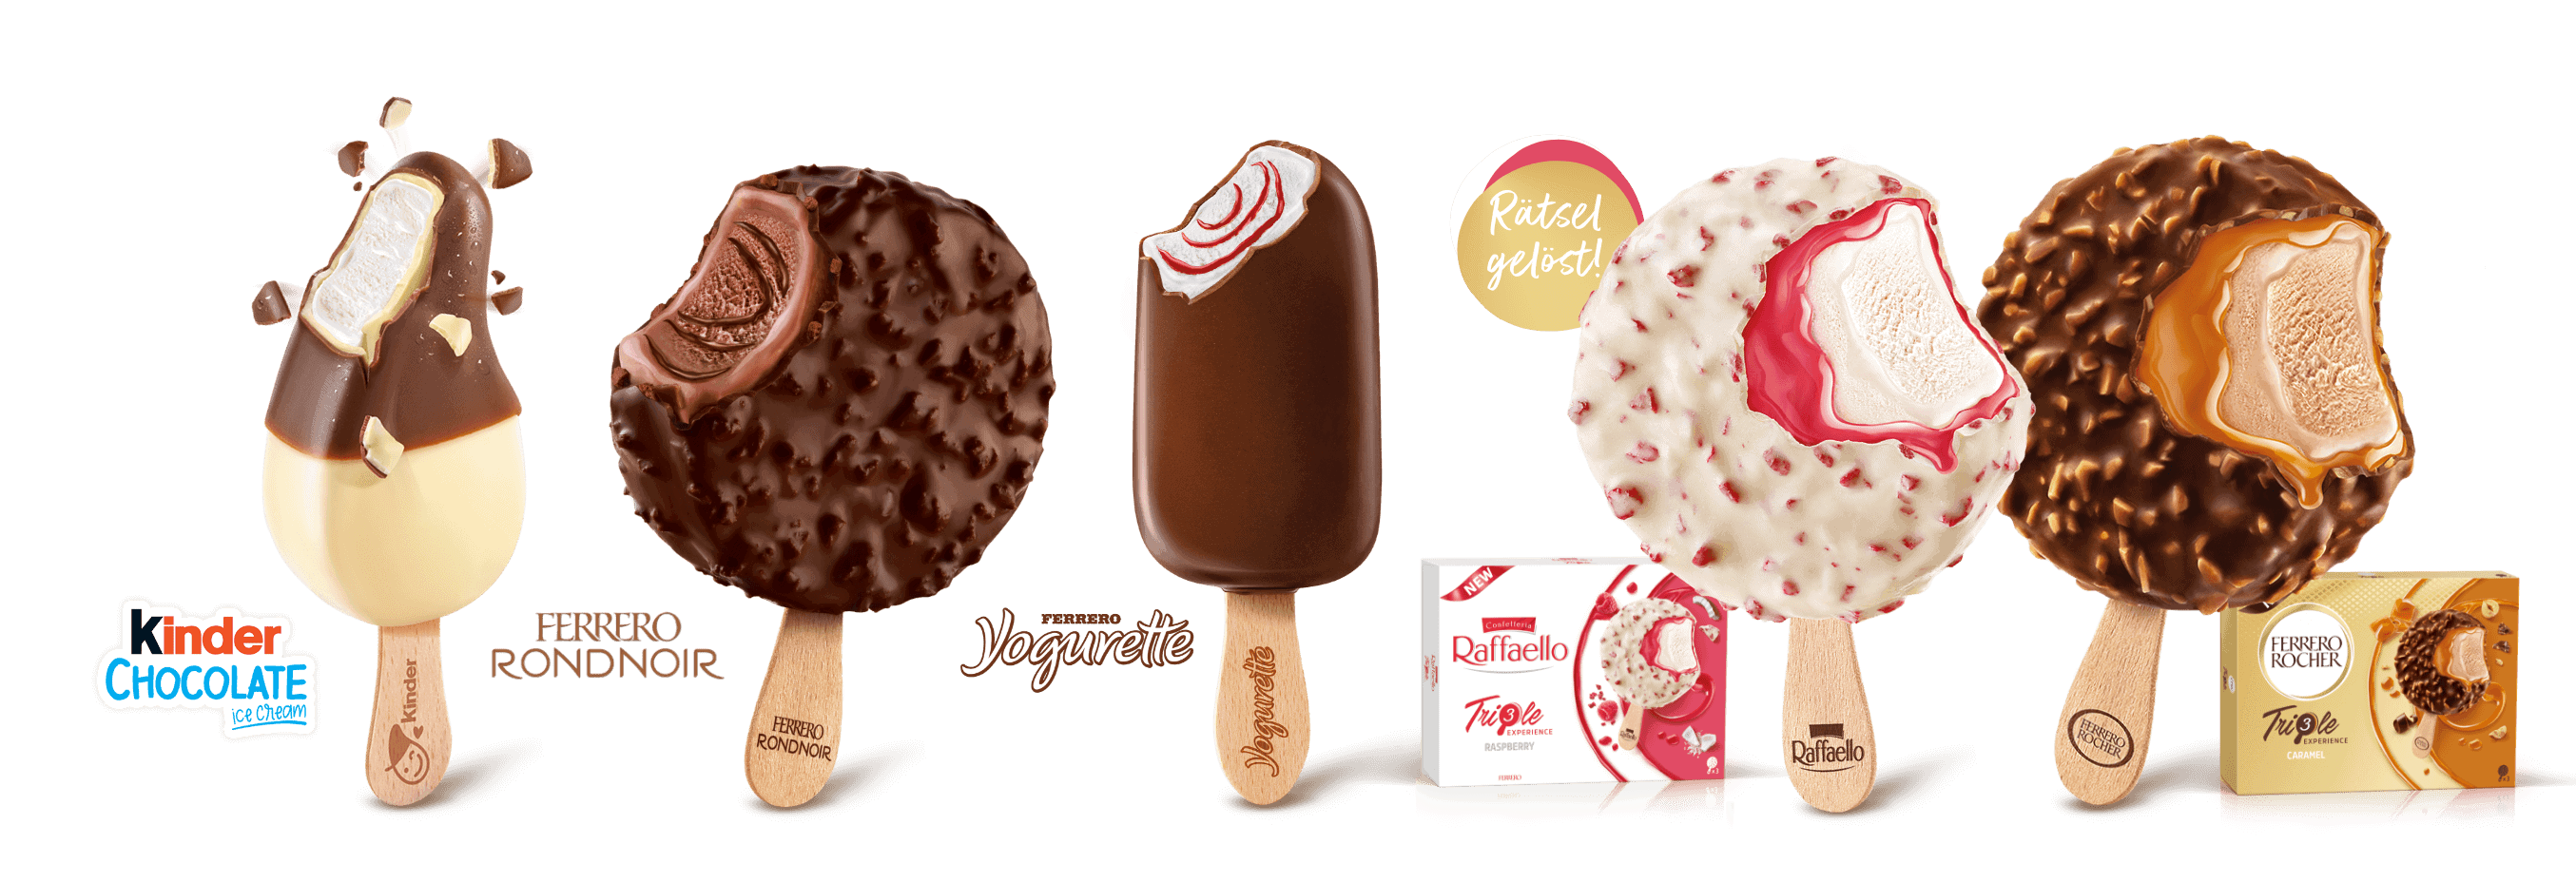 kinder-schokolade-rondnoir-yogurette-triple-eis@2x